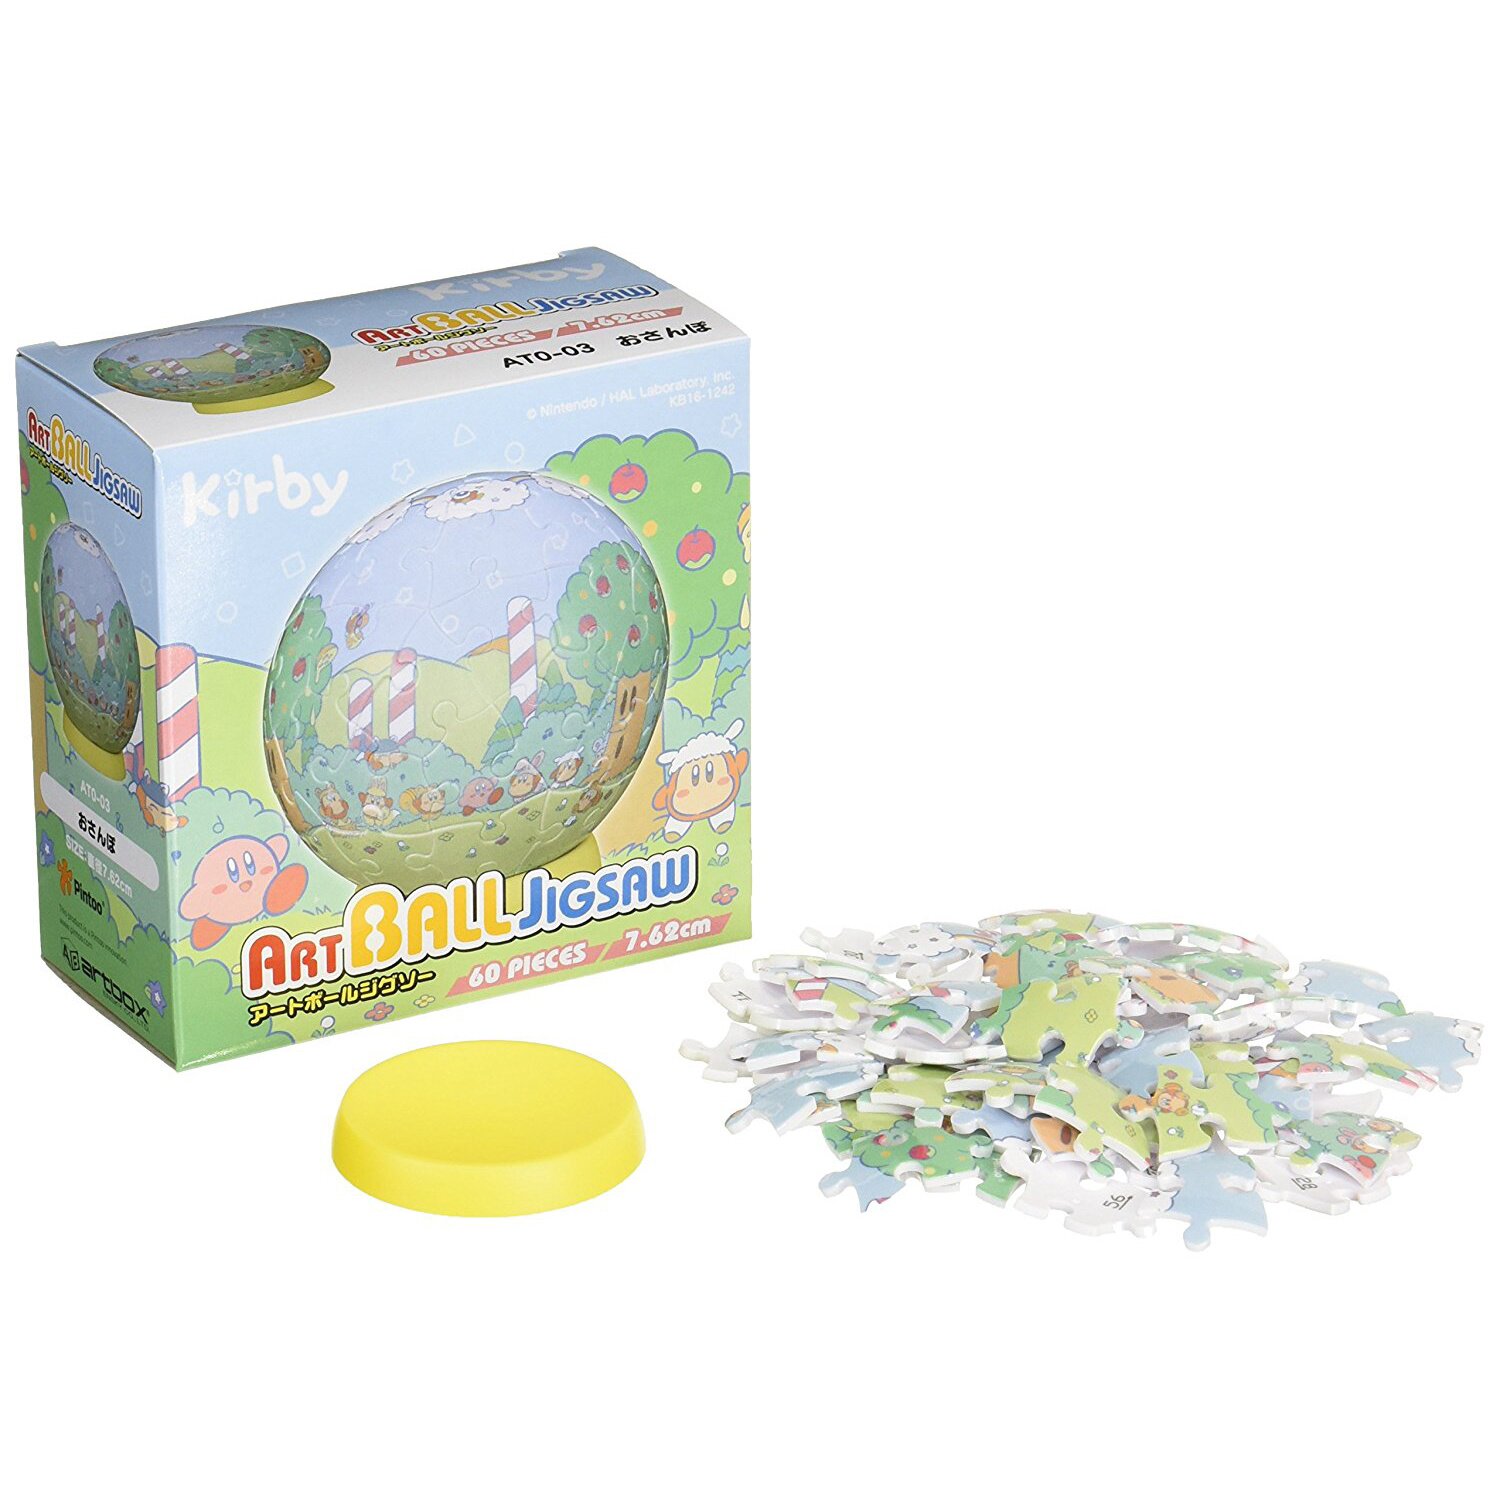 Puzzle Earth Dream - 1500 pieces